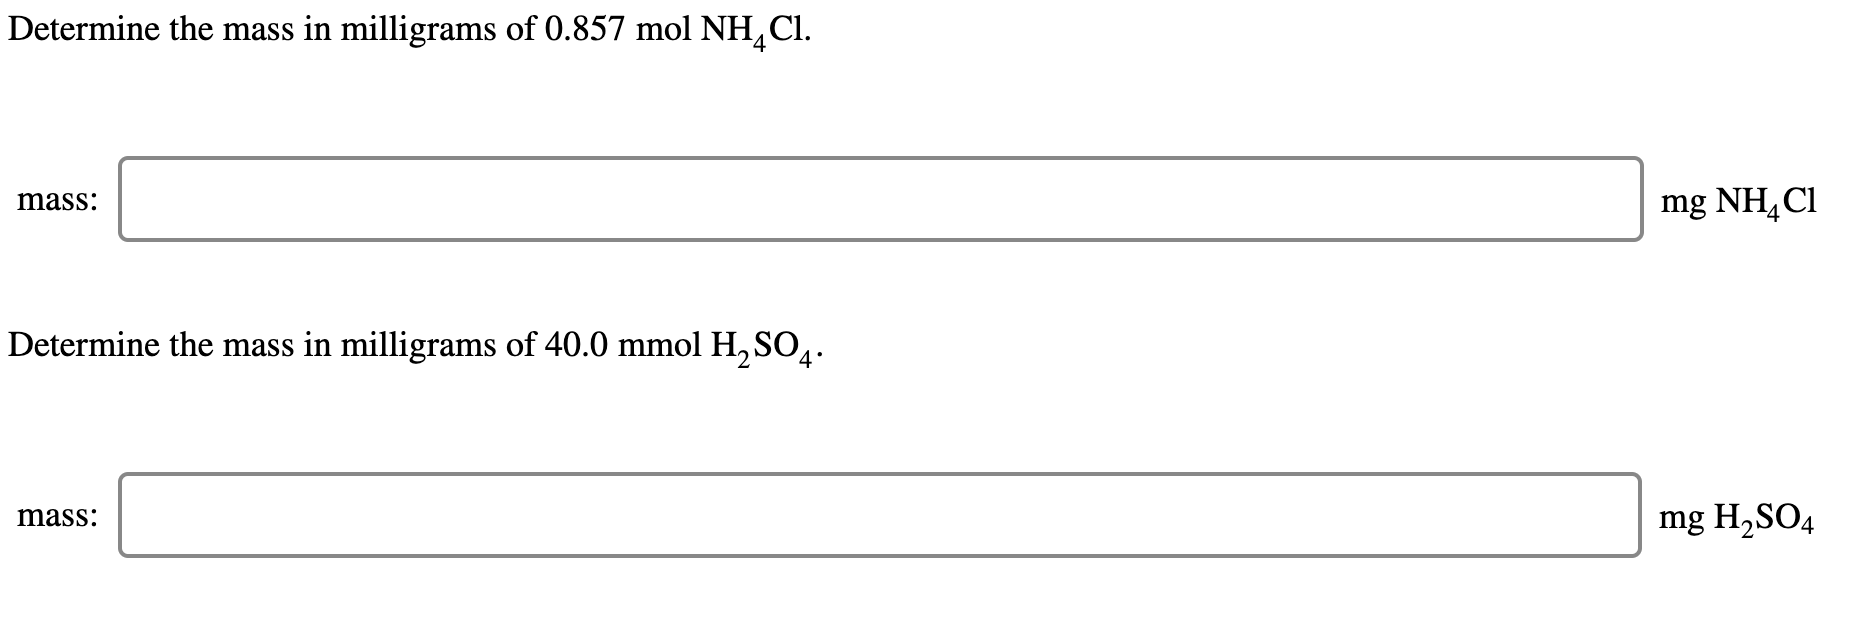 Determine the mass in milligrams of 0.857 mol NH,
CI.
mg NH,Cl
mass:
Determine the mass in milligrams of 40.0 mmol H,SO̟.
mg H,SO4
mass:
